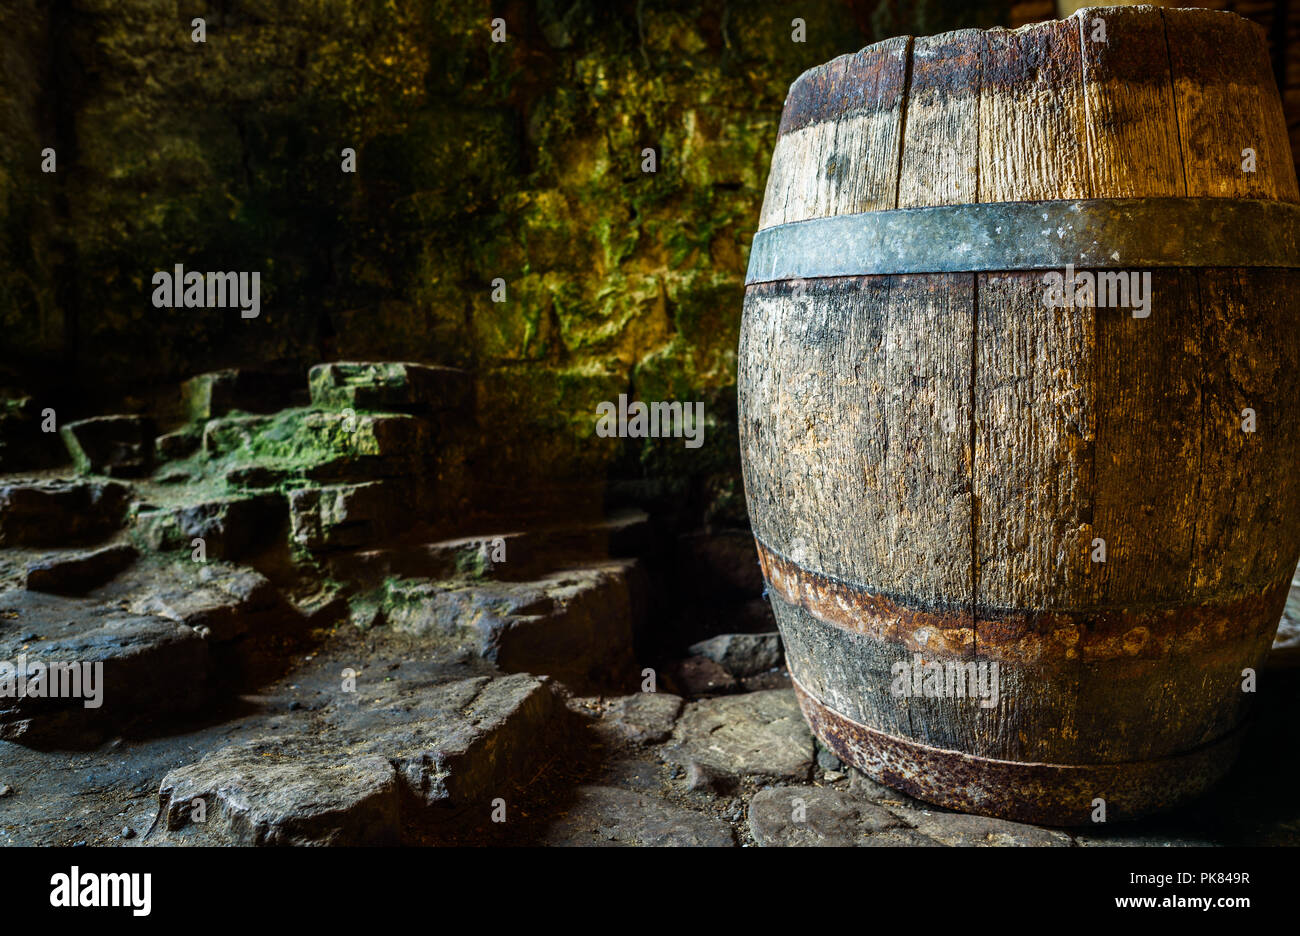 An old oak barrel inside an ancient stone building. Stock Photo